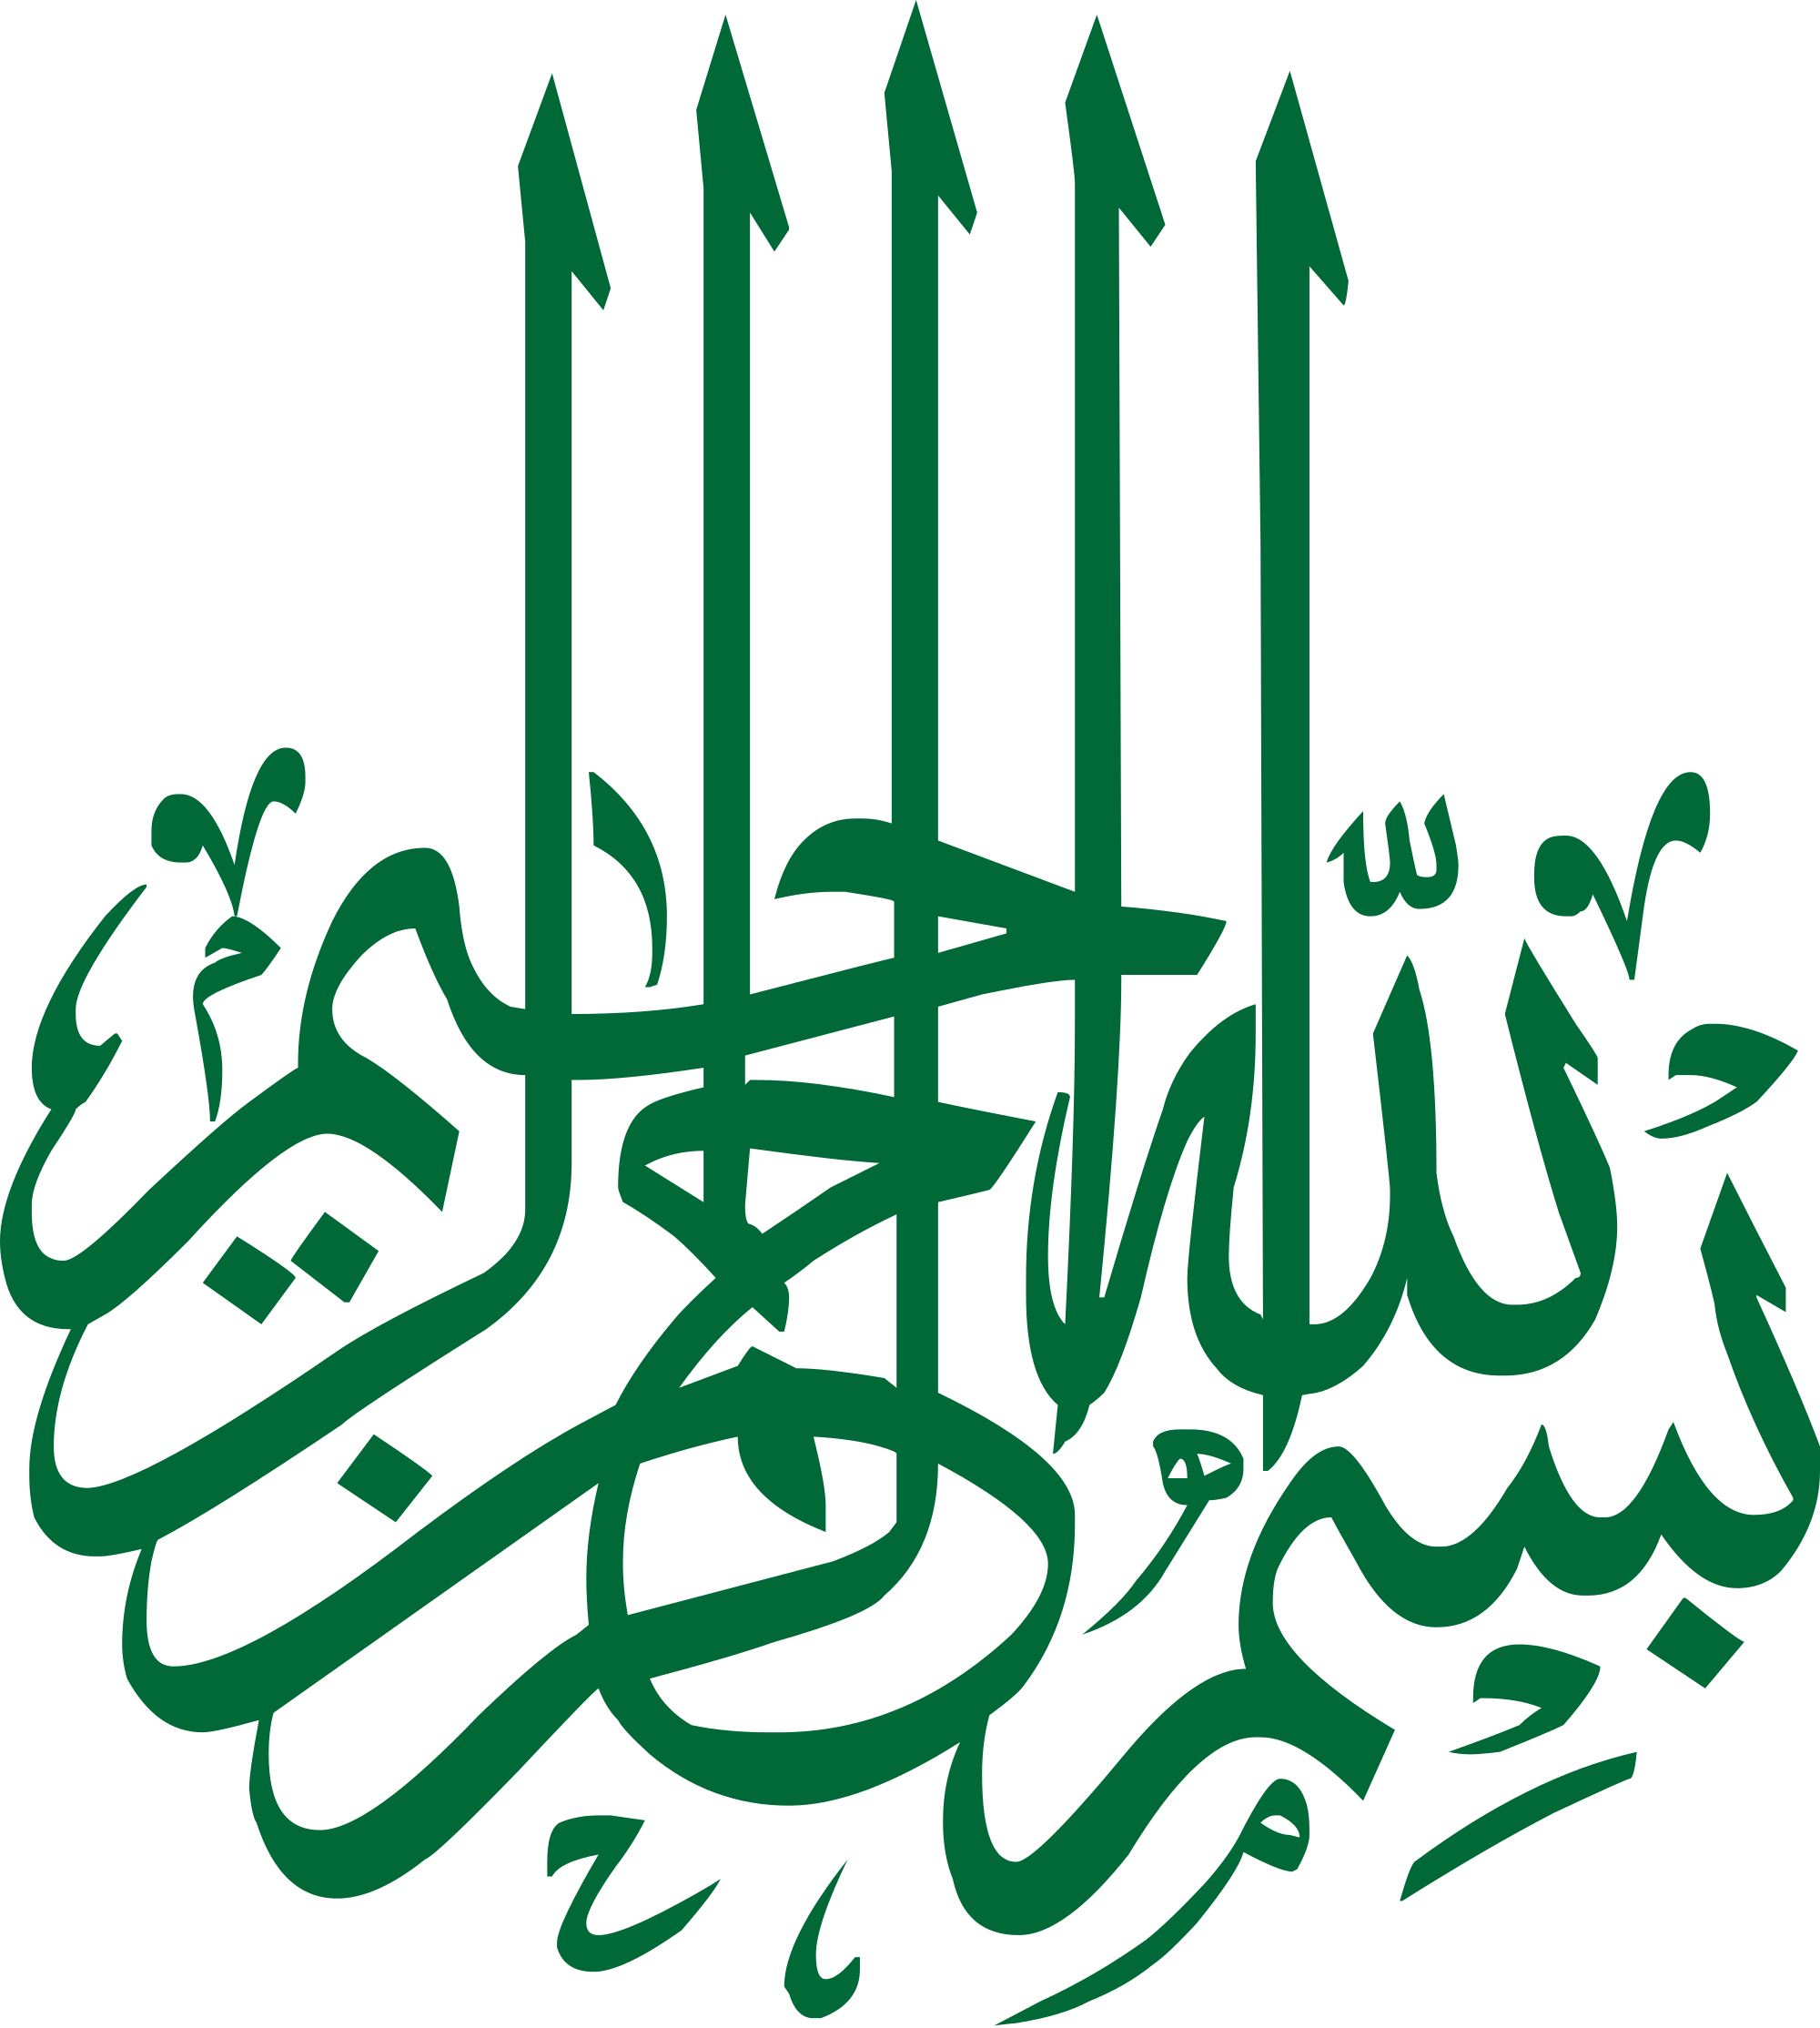 Image Bismillah Png Clipart Best Arabic Calligraphy Bismillah Imagesee